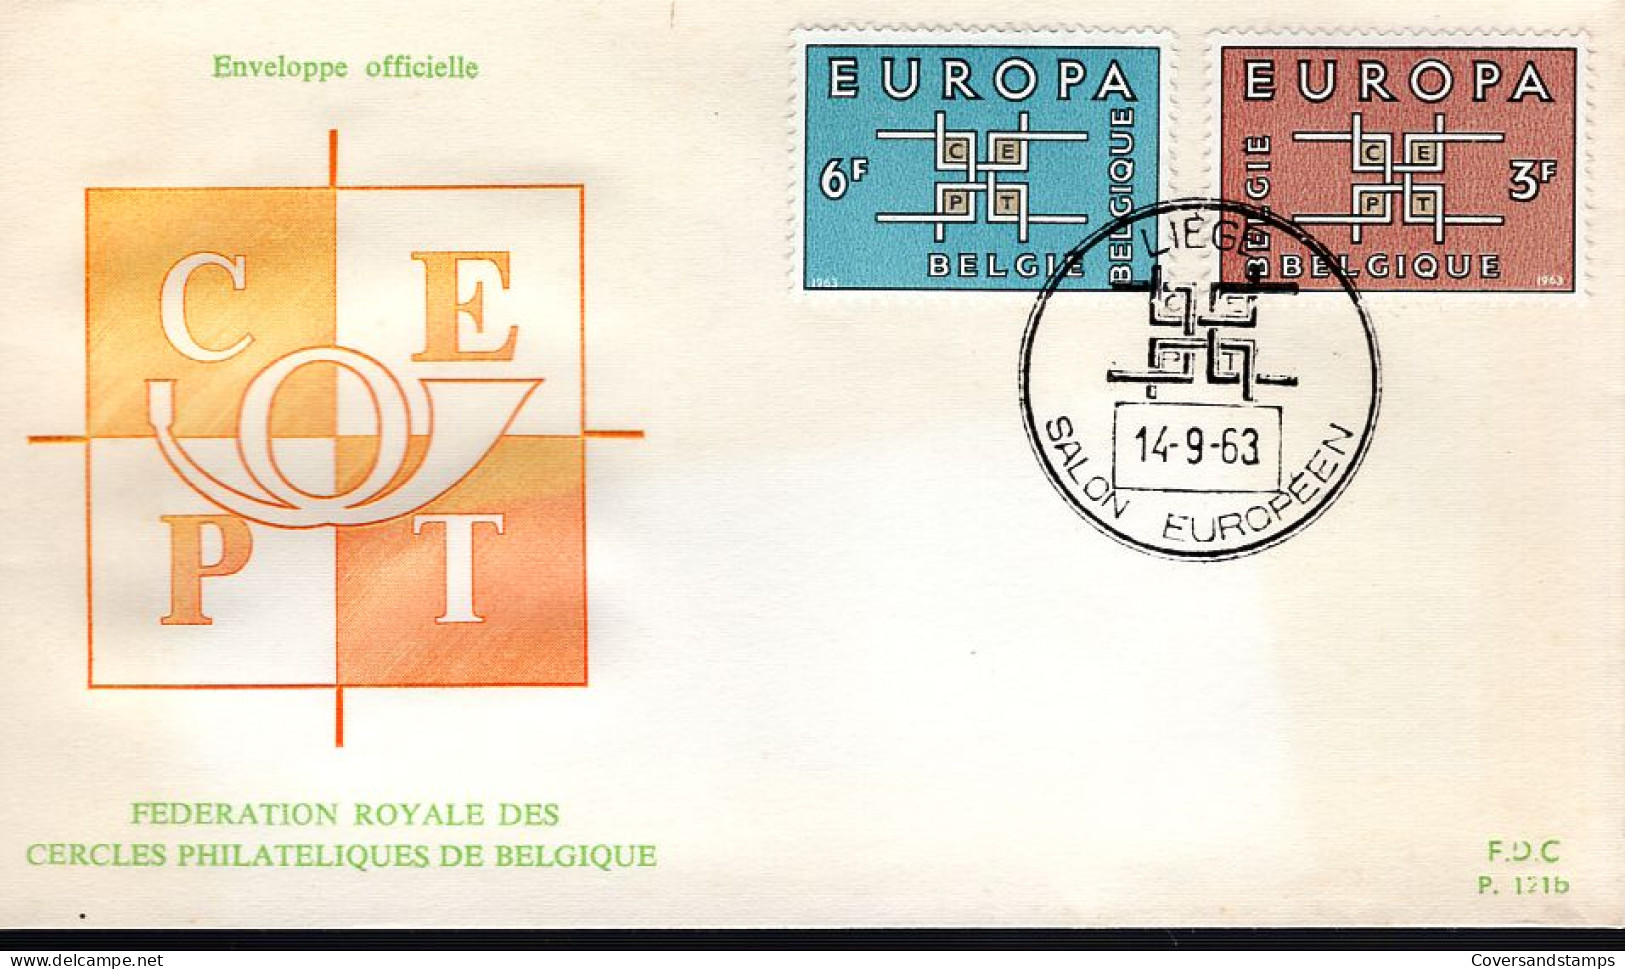  België - FDC - Europa CEPT 1963 - 1963